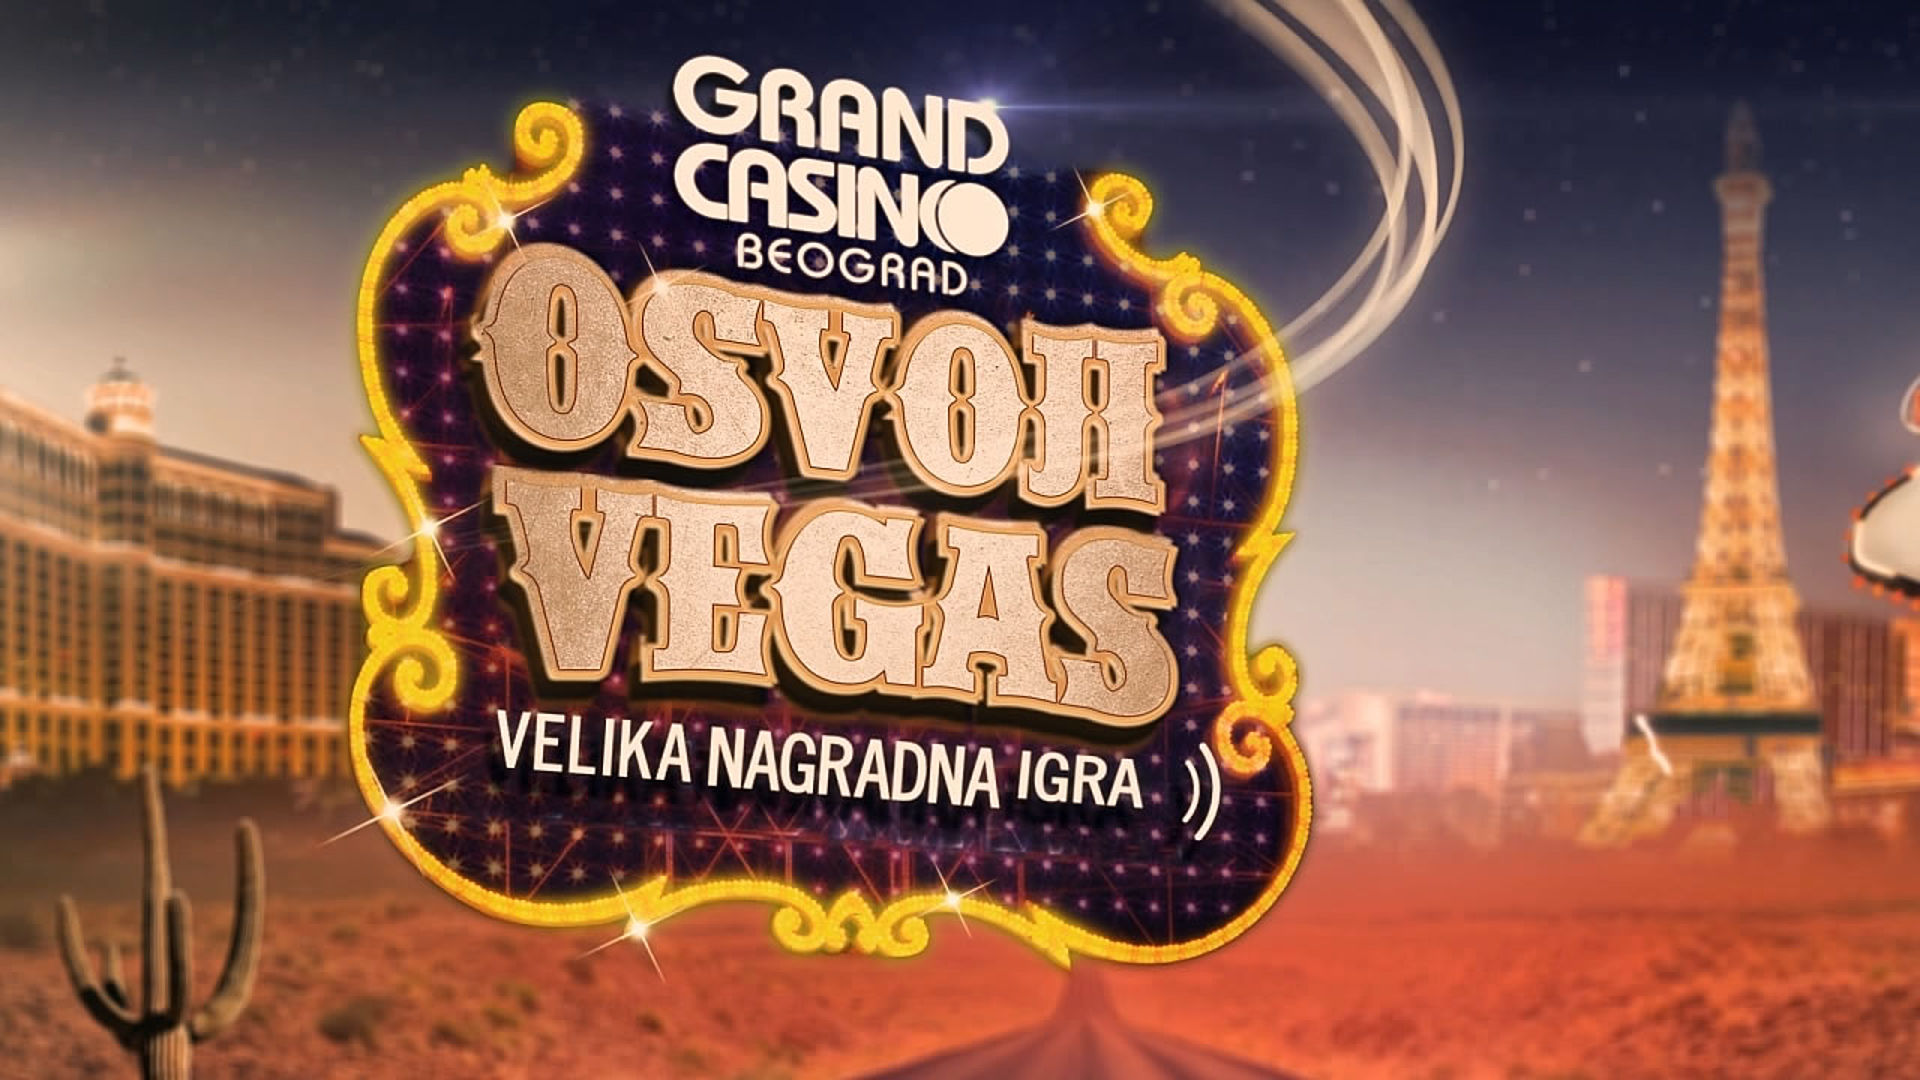 Grand casino регистрация grand fsb1